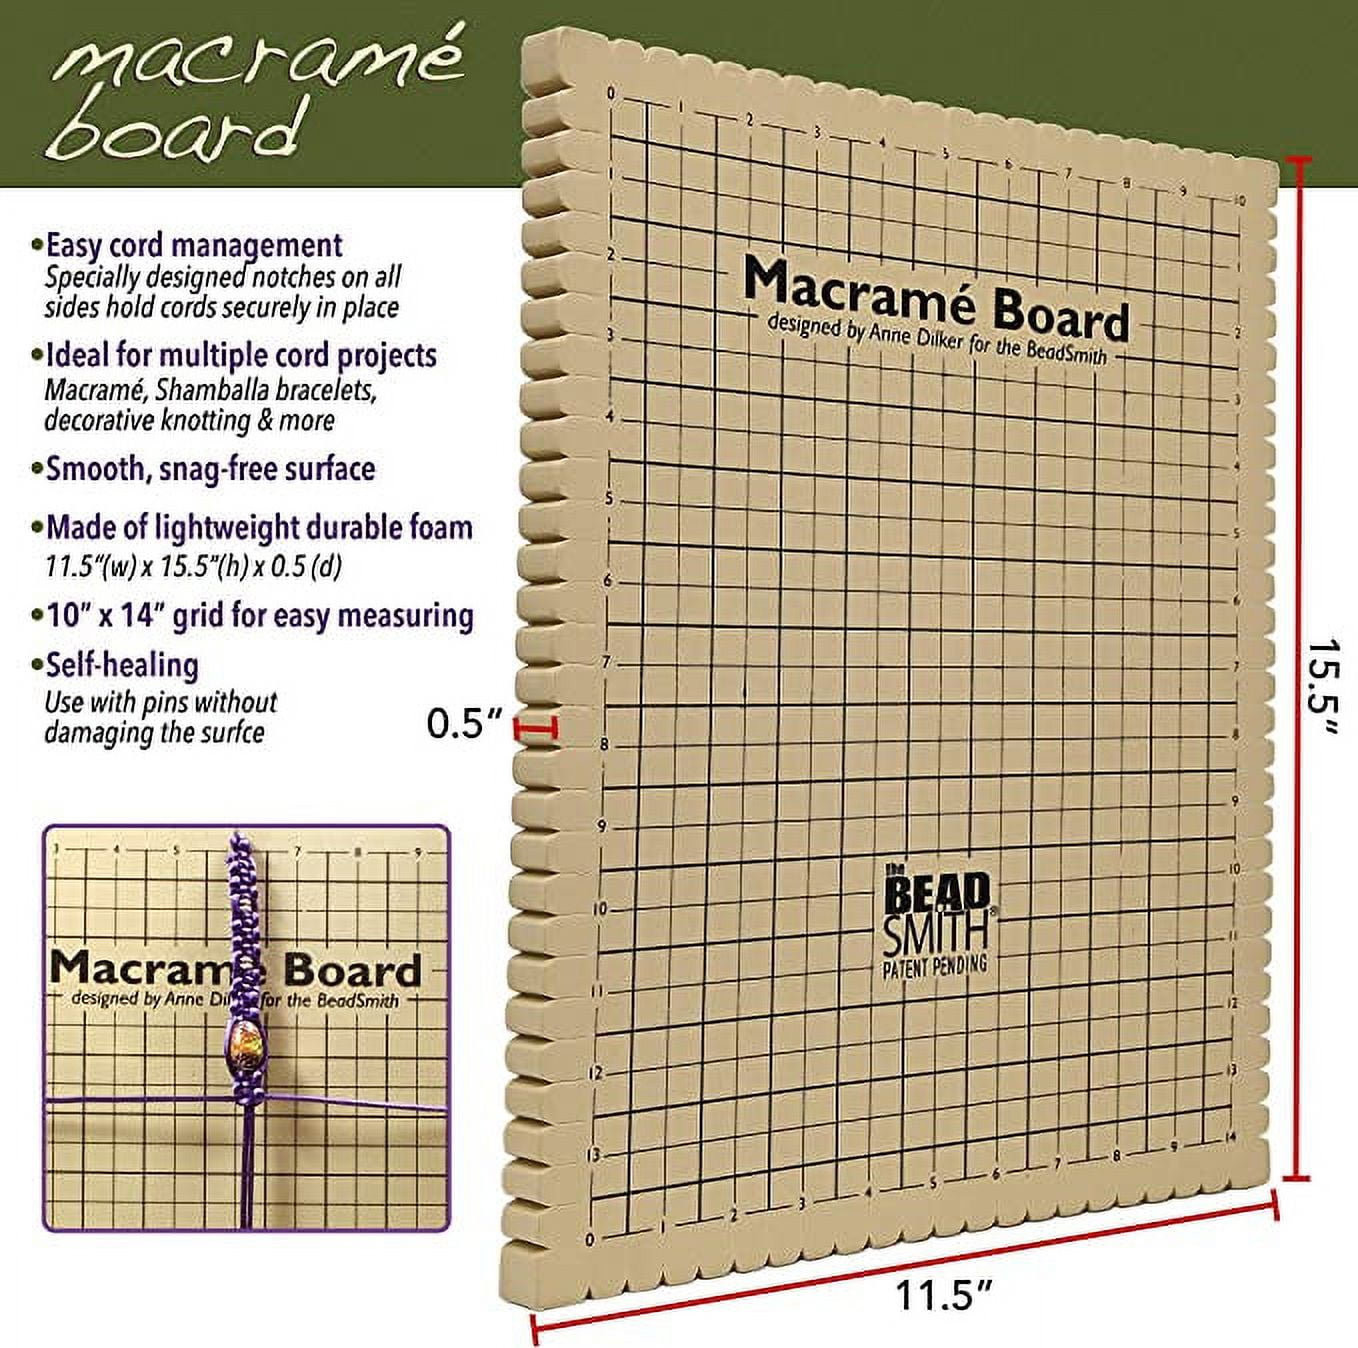 Macrame Board and Mini Macrame Board Designed By Anne Dilker